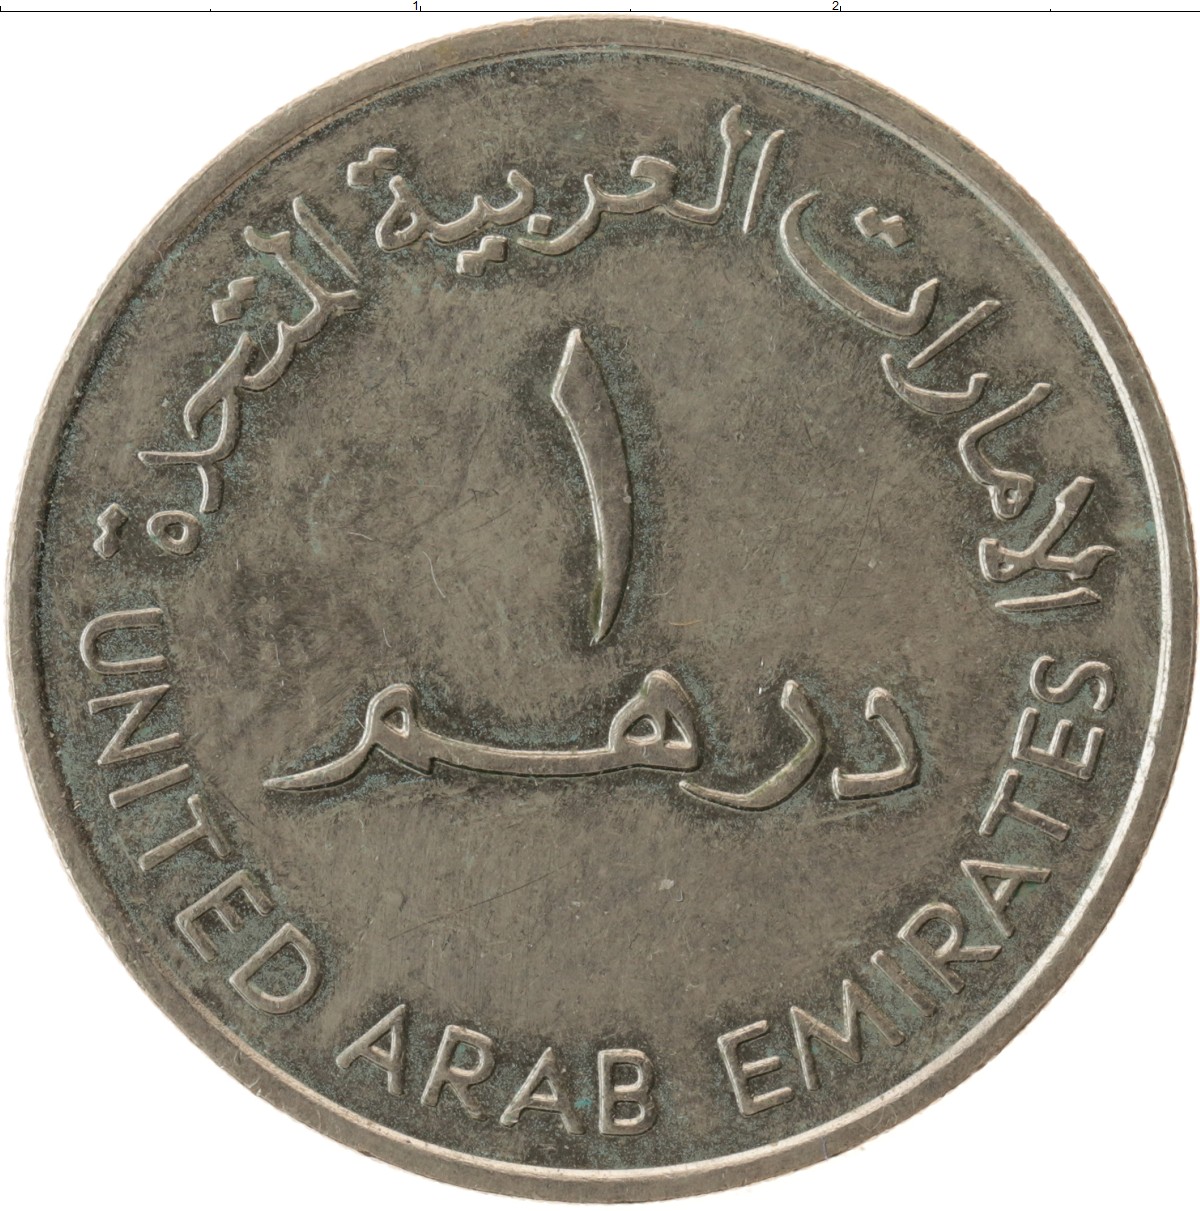 1 дирхам монета. Арабские монеты. Монеты Эмиратов. Монеты дирхам. Арабская монета 1.